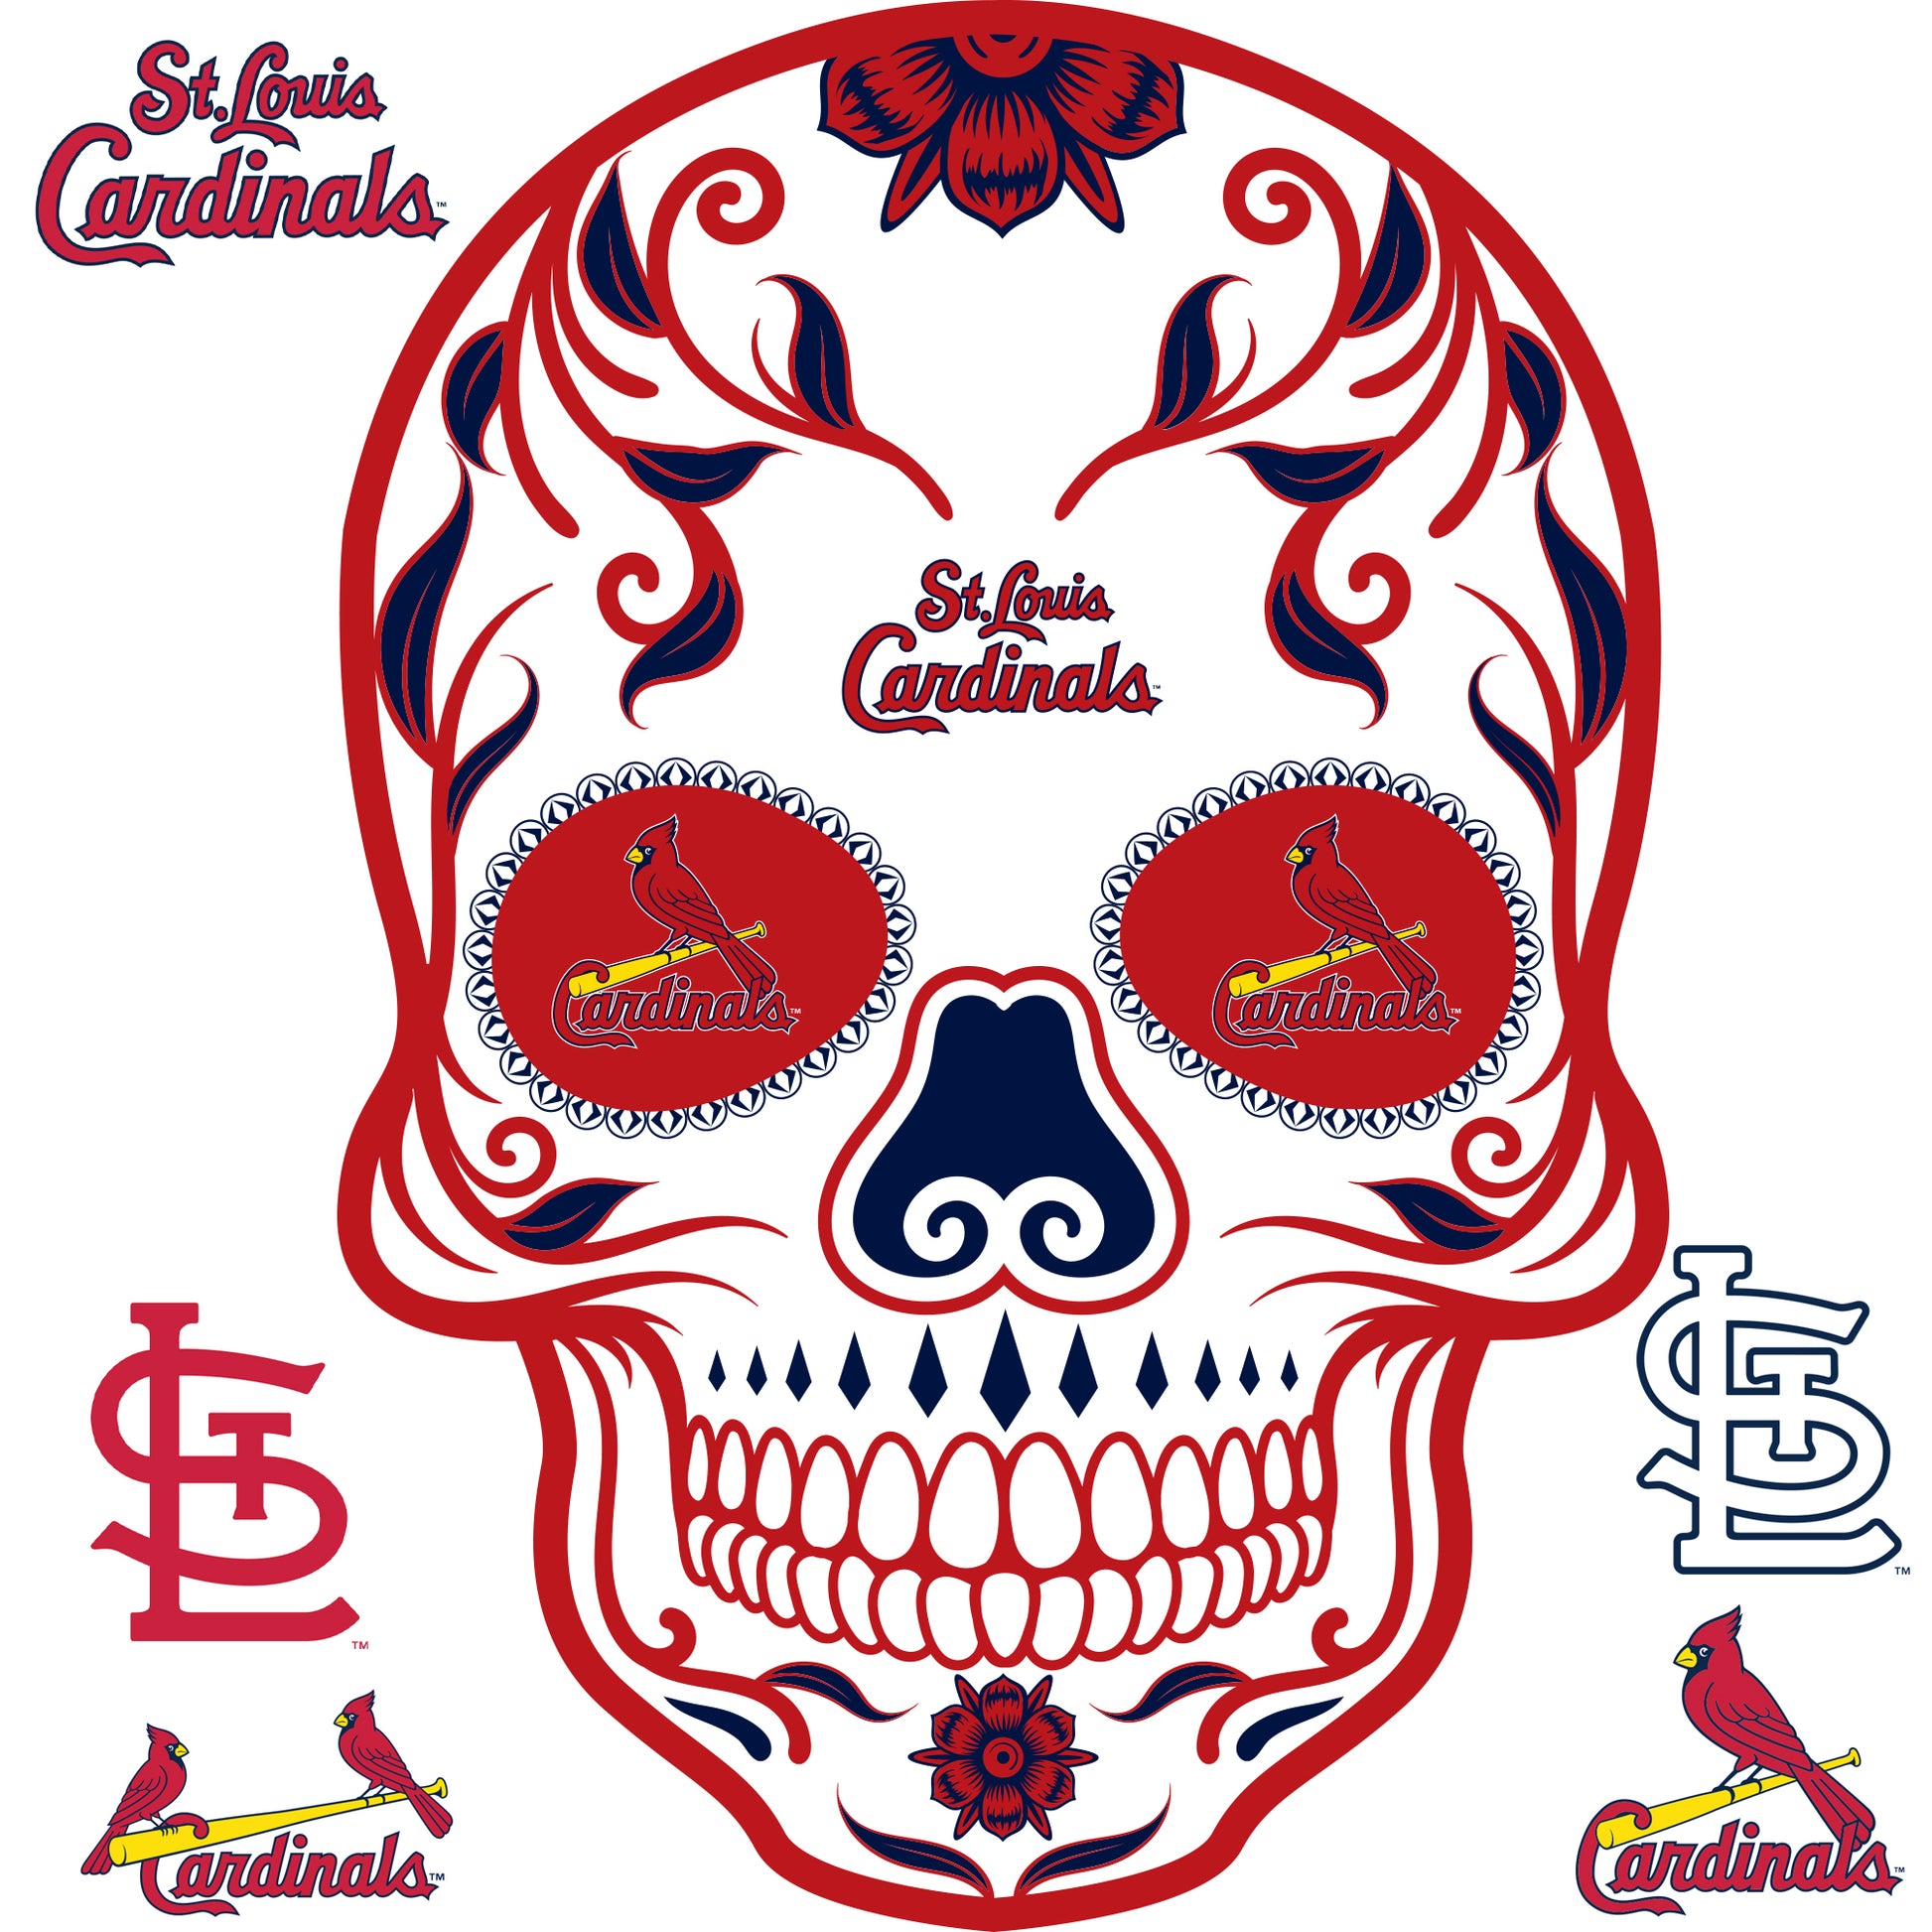 St. Louis Cardinals Large Decal Sticker